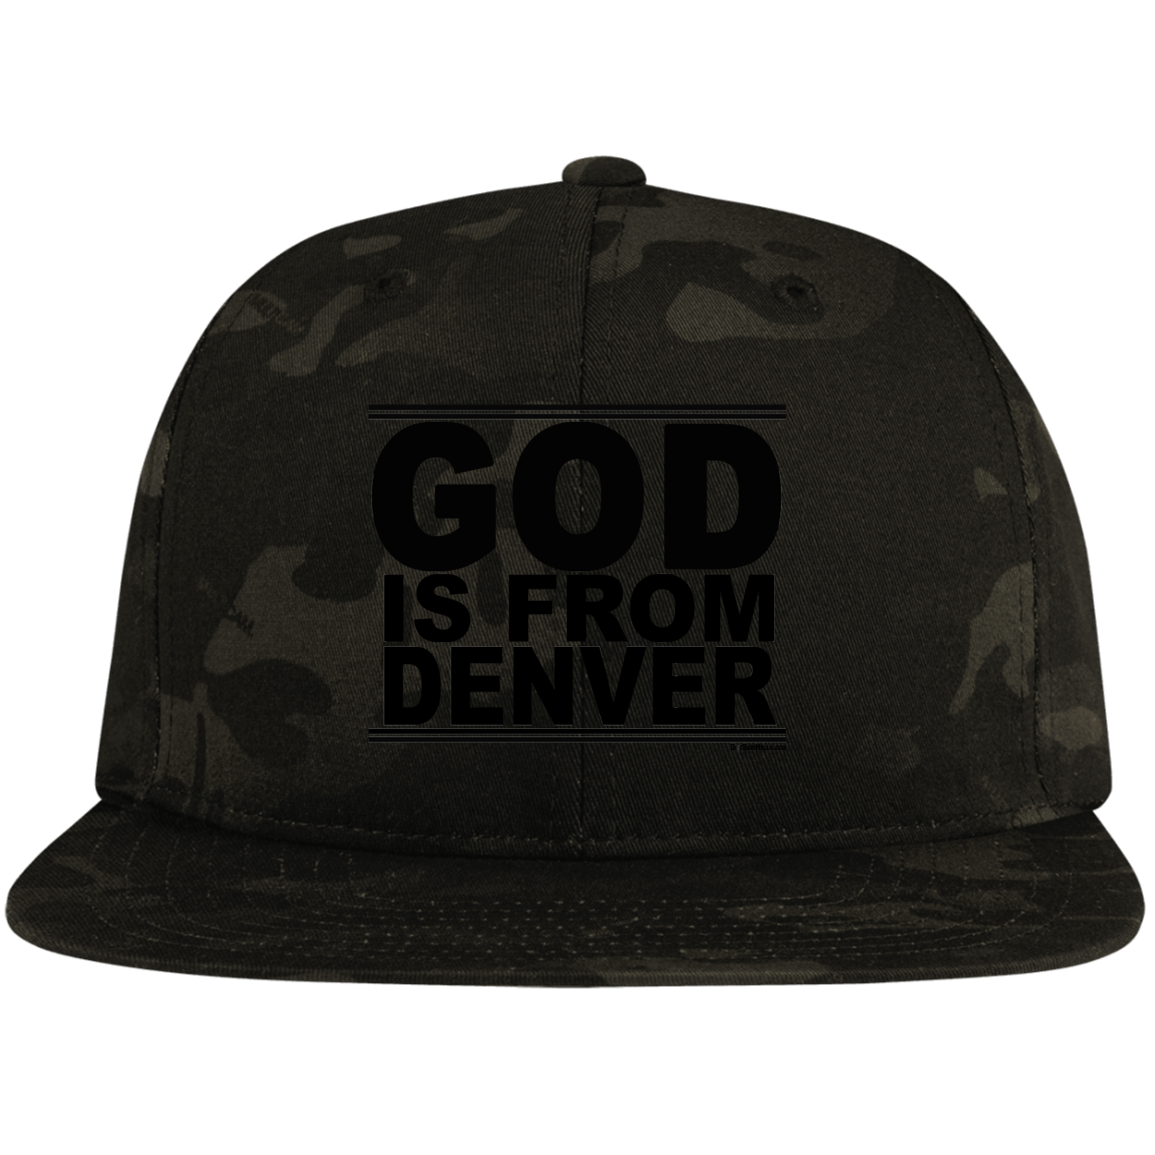 #GodIsFromDenver - Snapback Hat